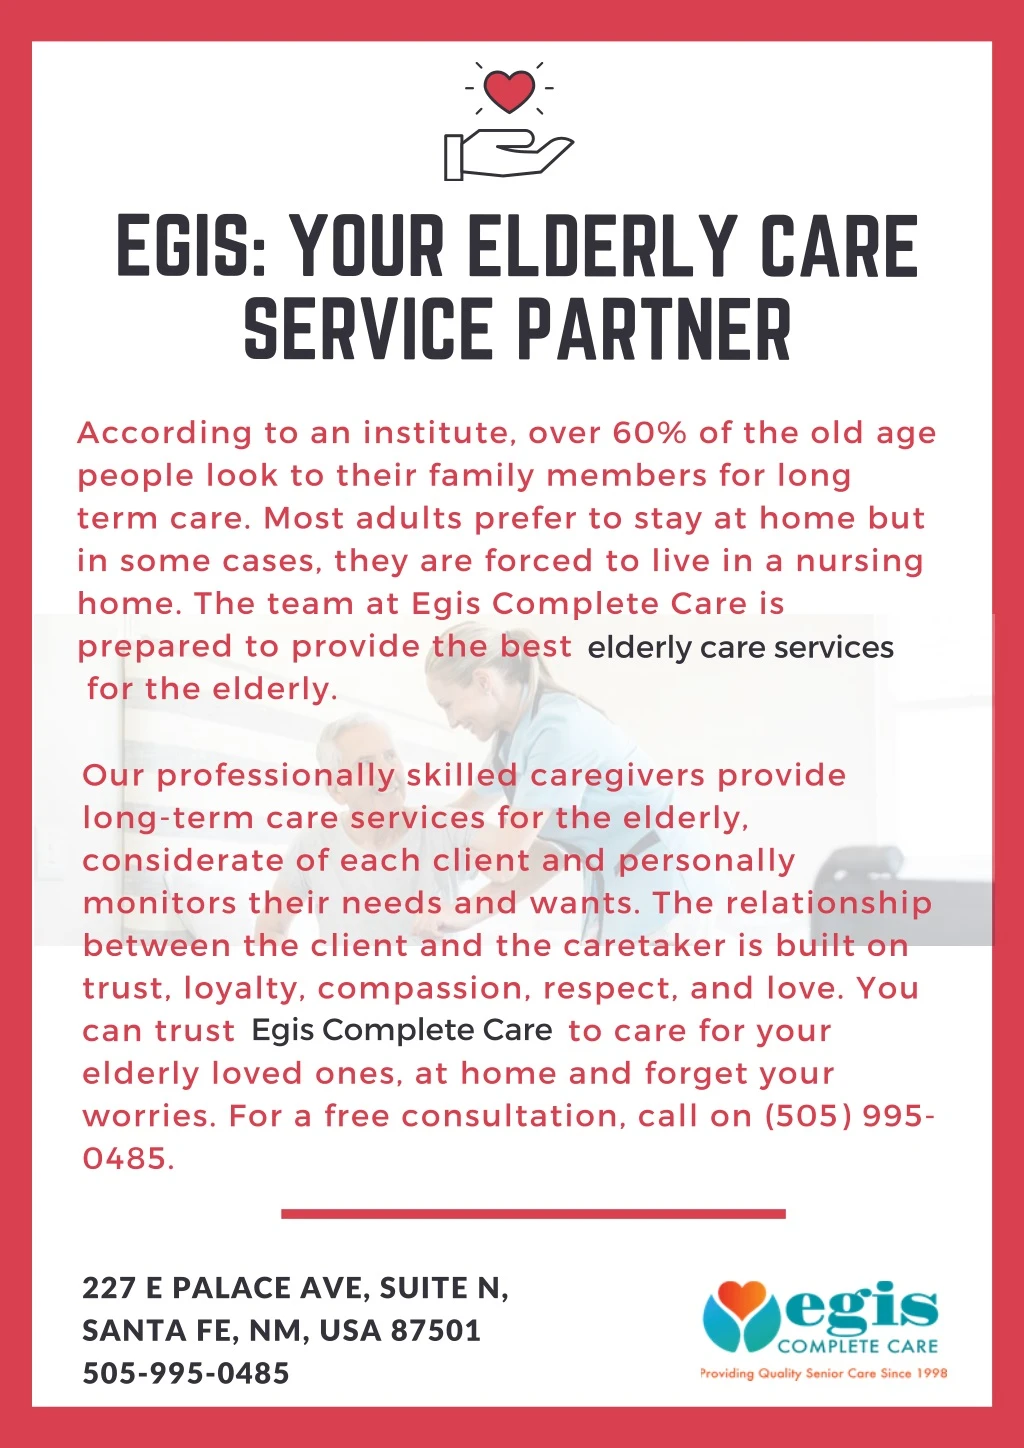 egis your elderly care service partner